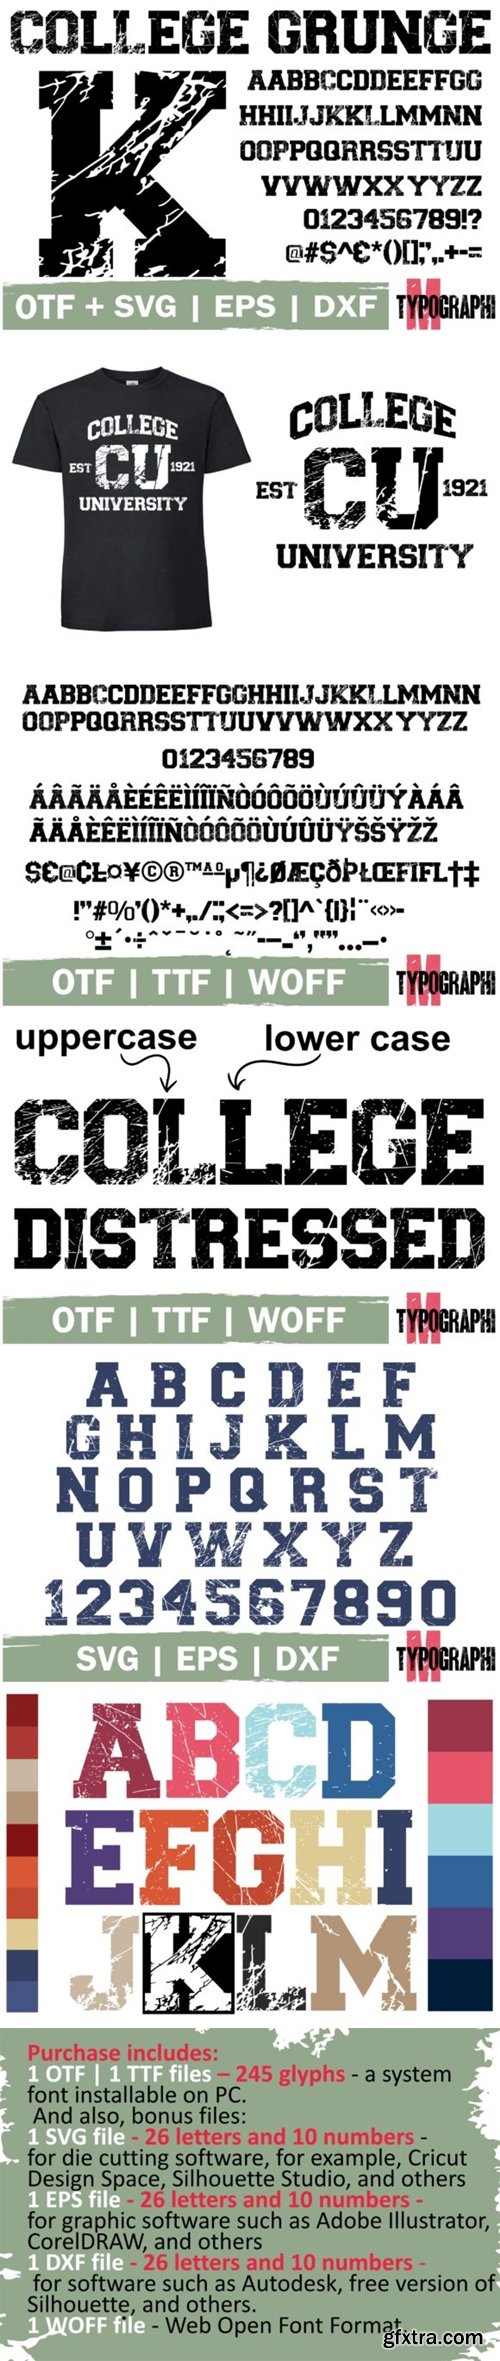 College Grunge Font